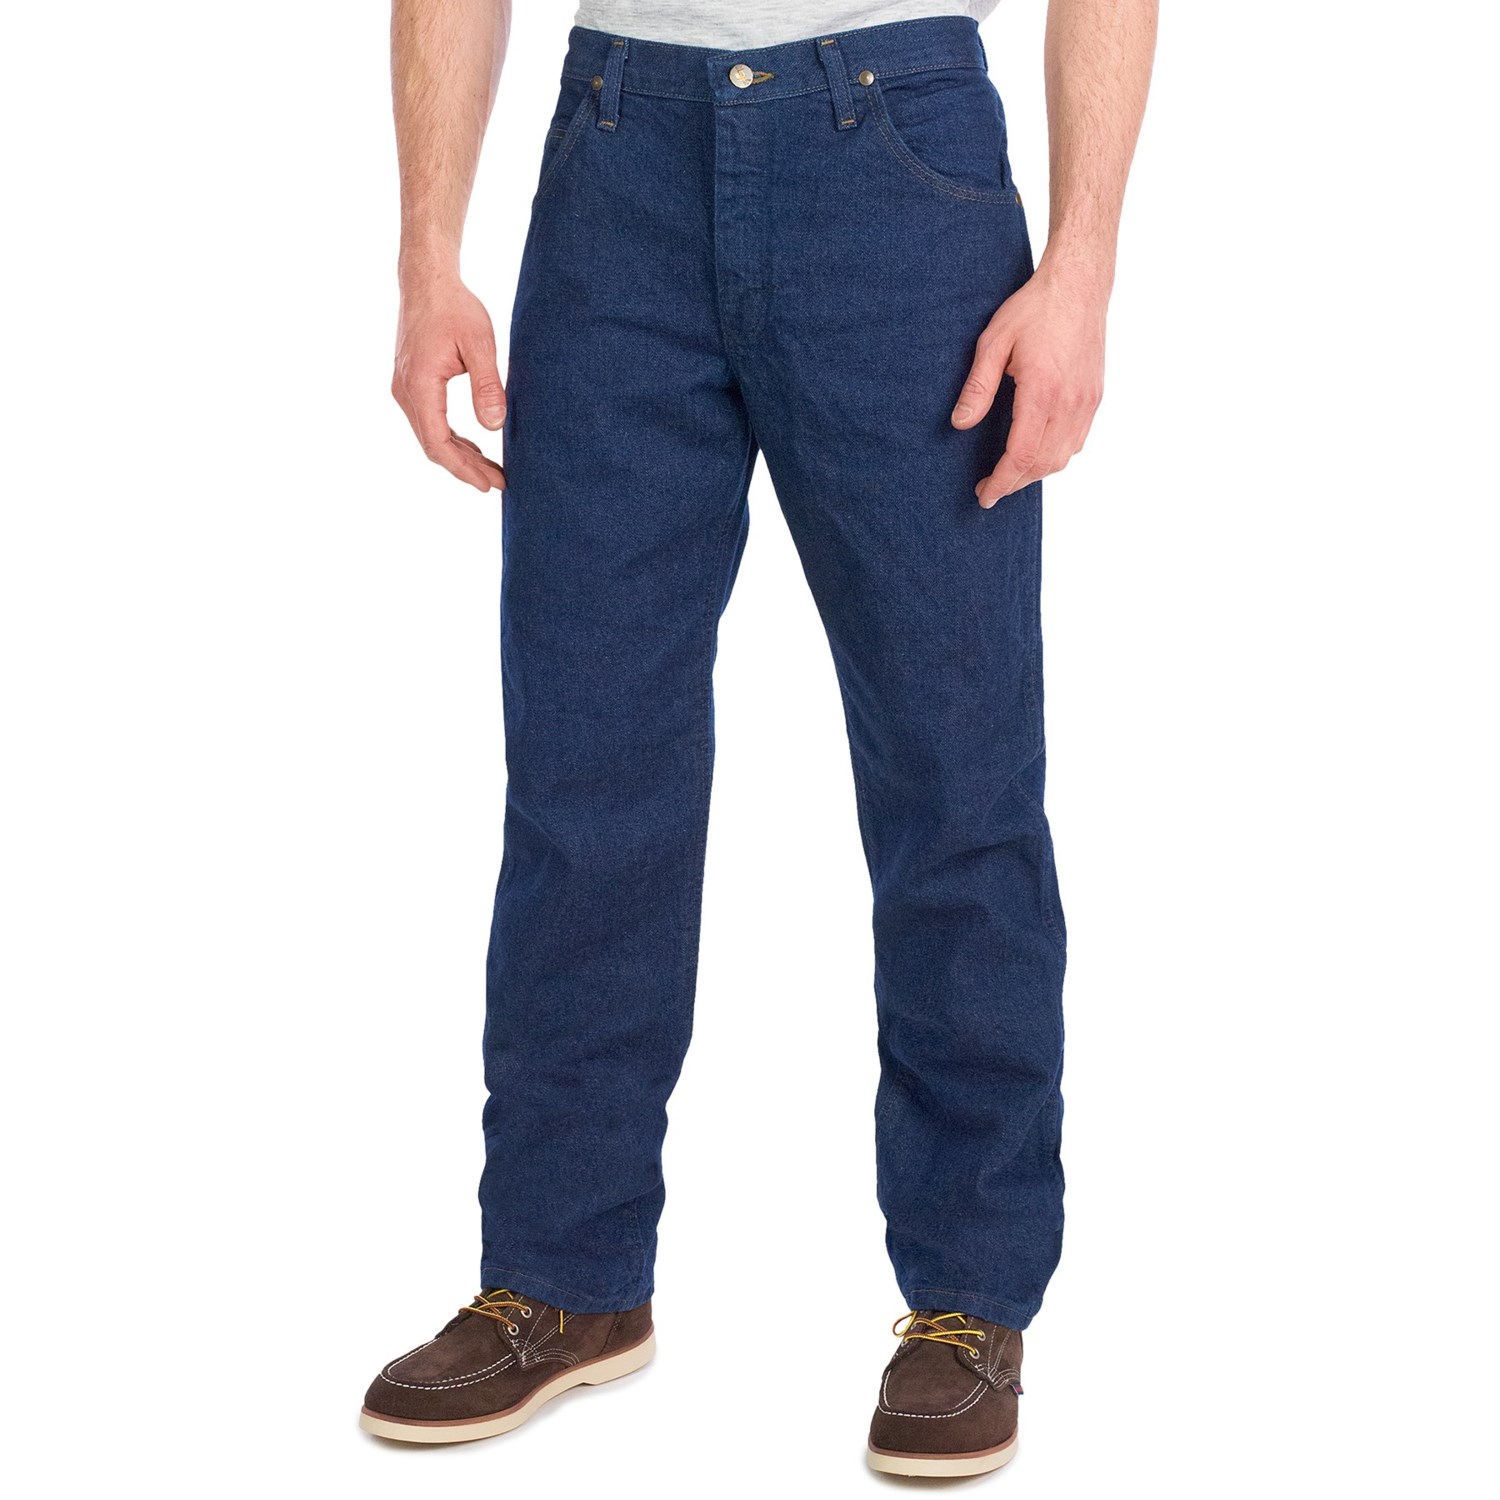 Wrangler Premium Performance Jeans (For Men) - Save 42%